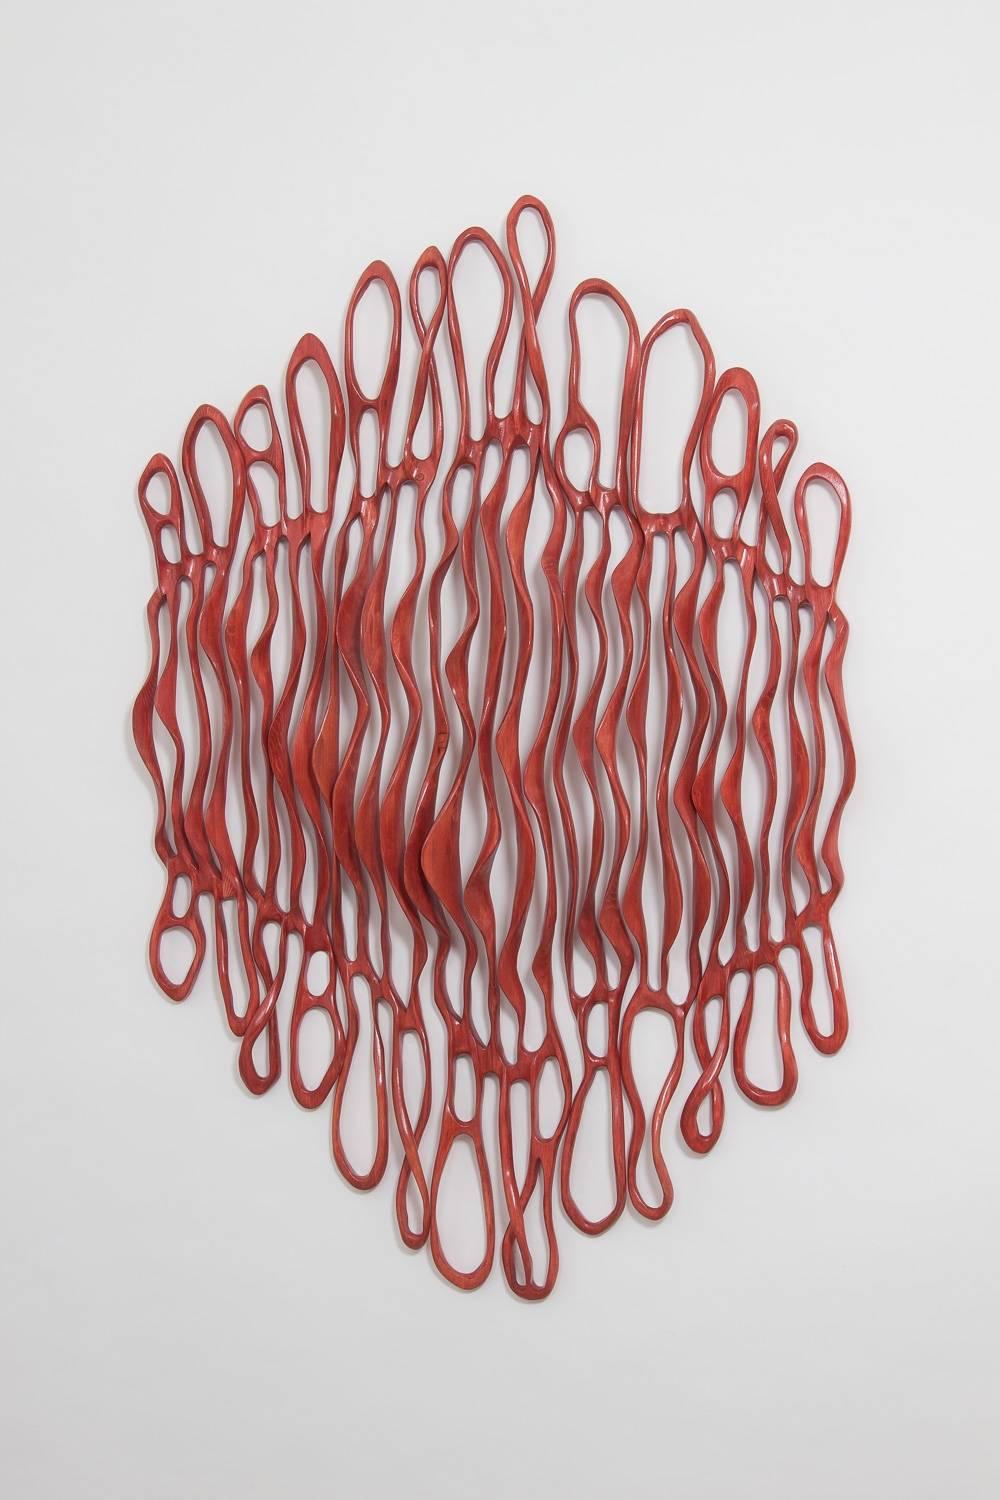 Red Dawn Cascade - Contemporary Sculpture by Caprice Pierucci